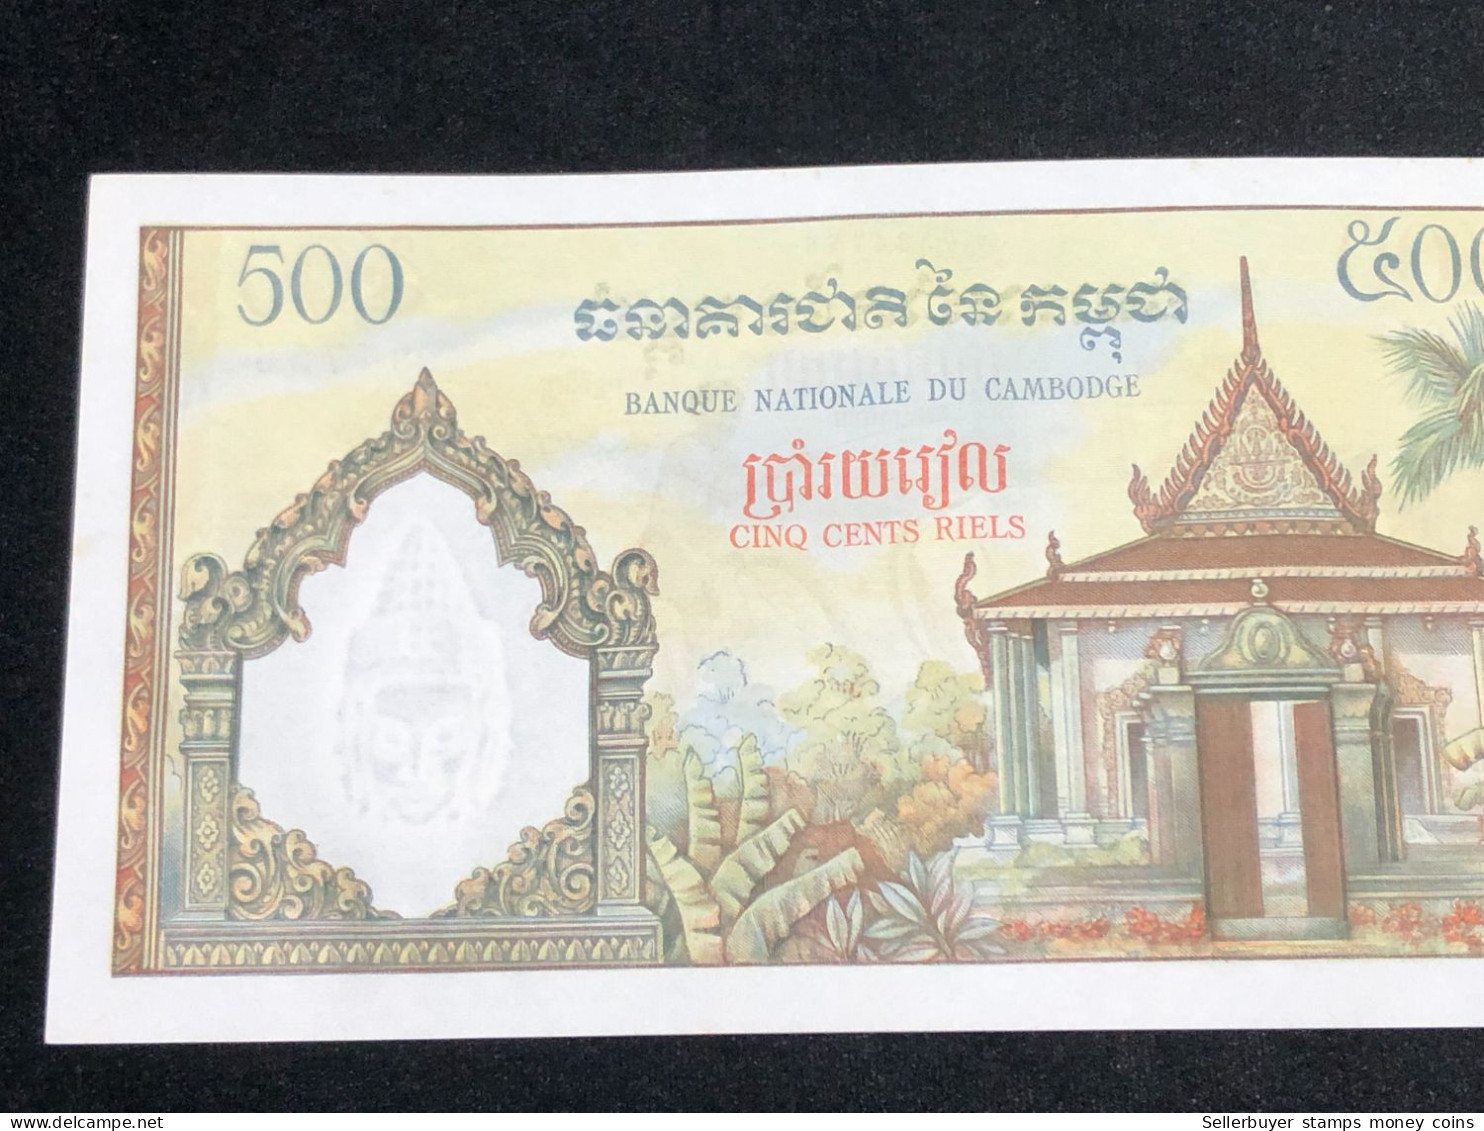 cambodia kingdom banknotes #16B-500 riels 1956-1 pcs aunc very rare-number-4756